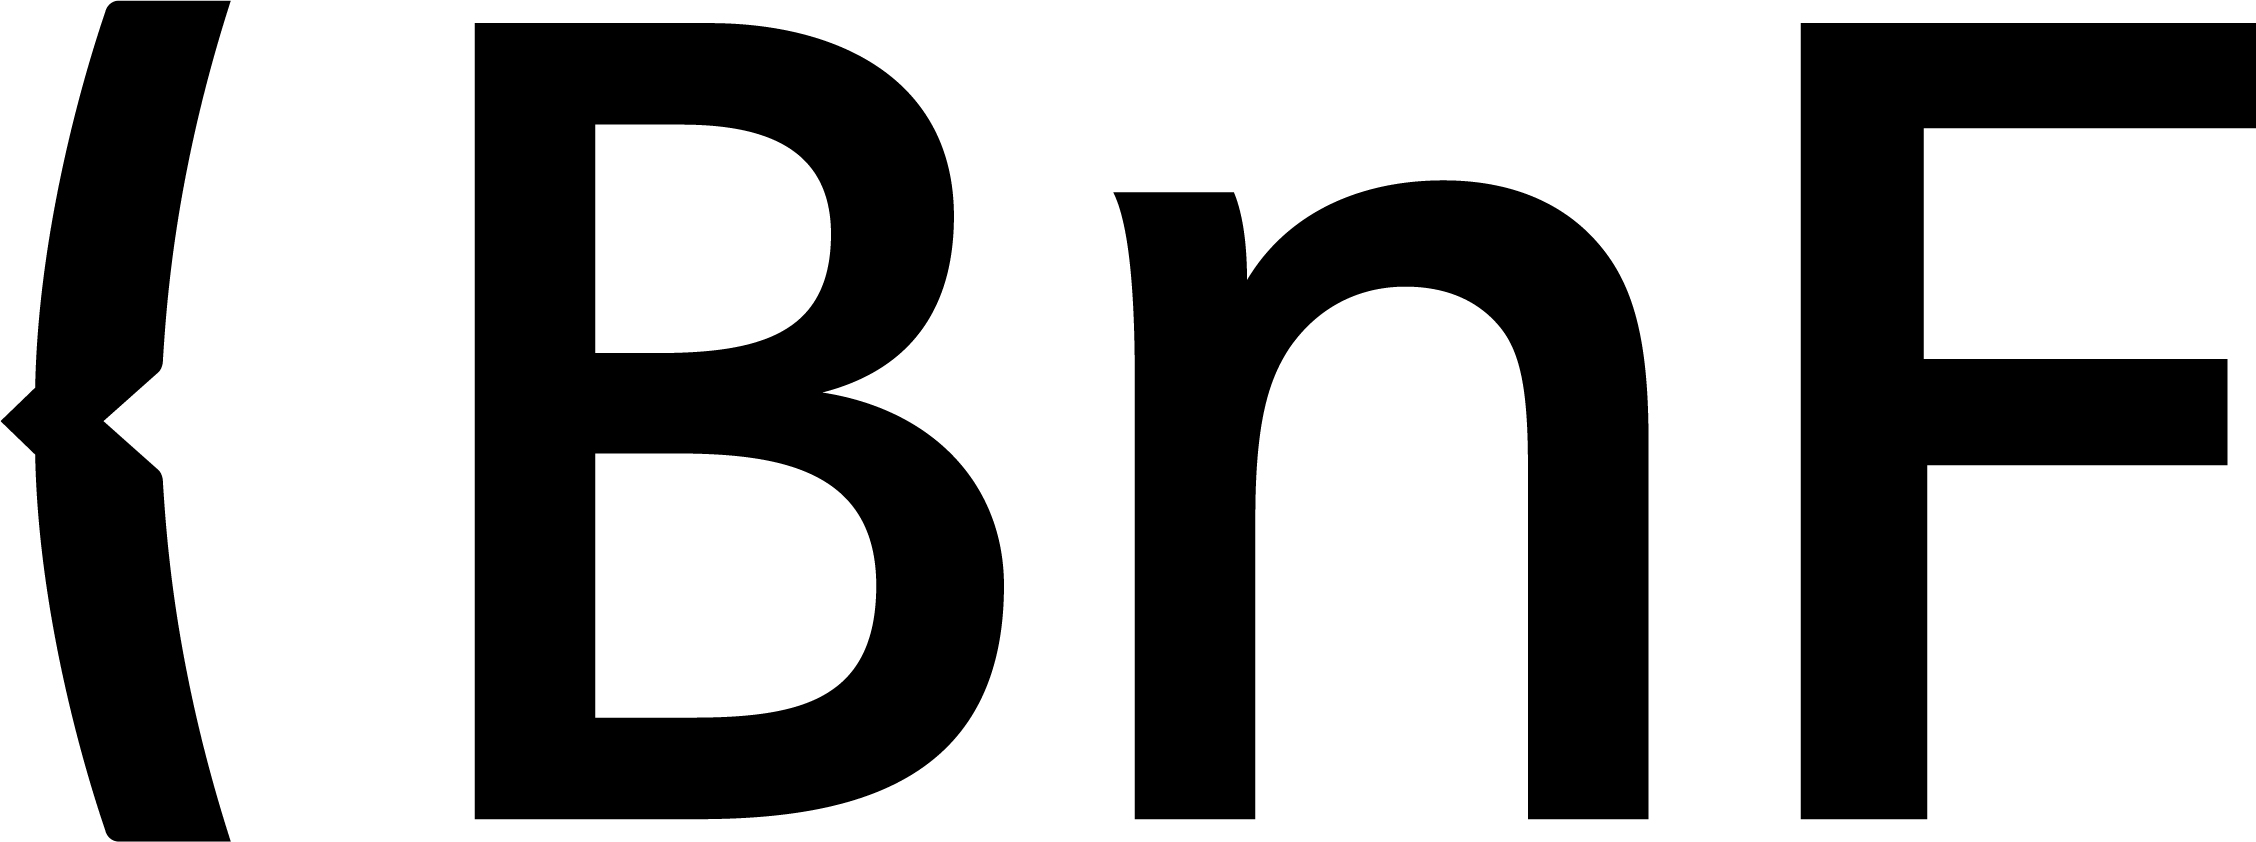 logo BnF